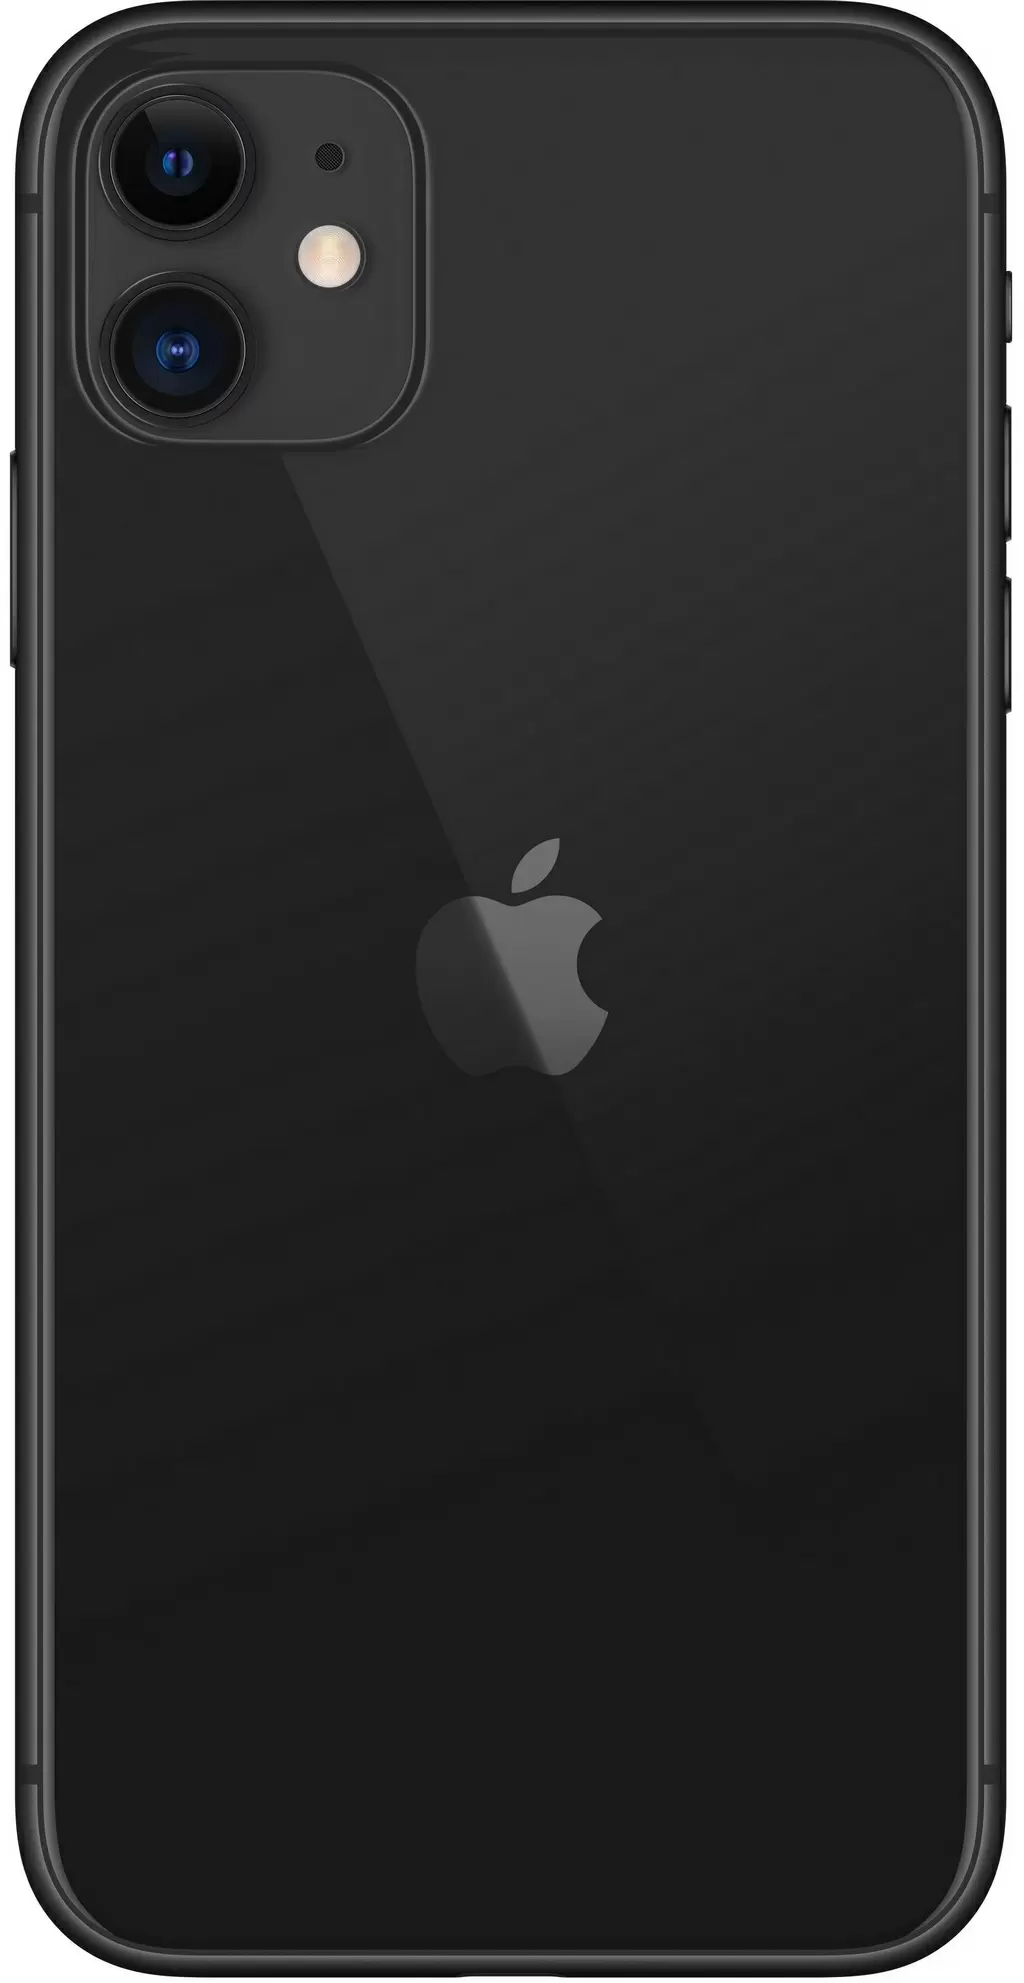 Smartphone Apple iPhone 11 128GB, negru